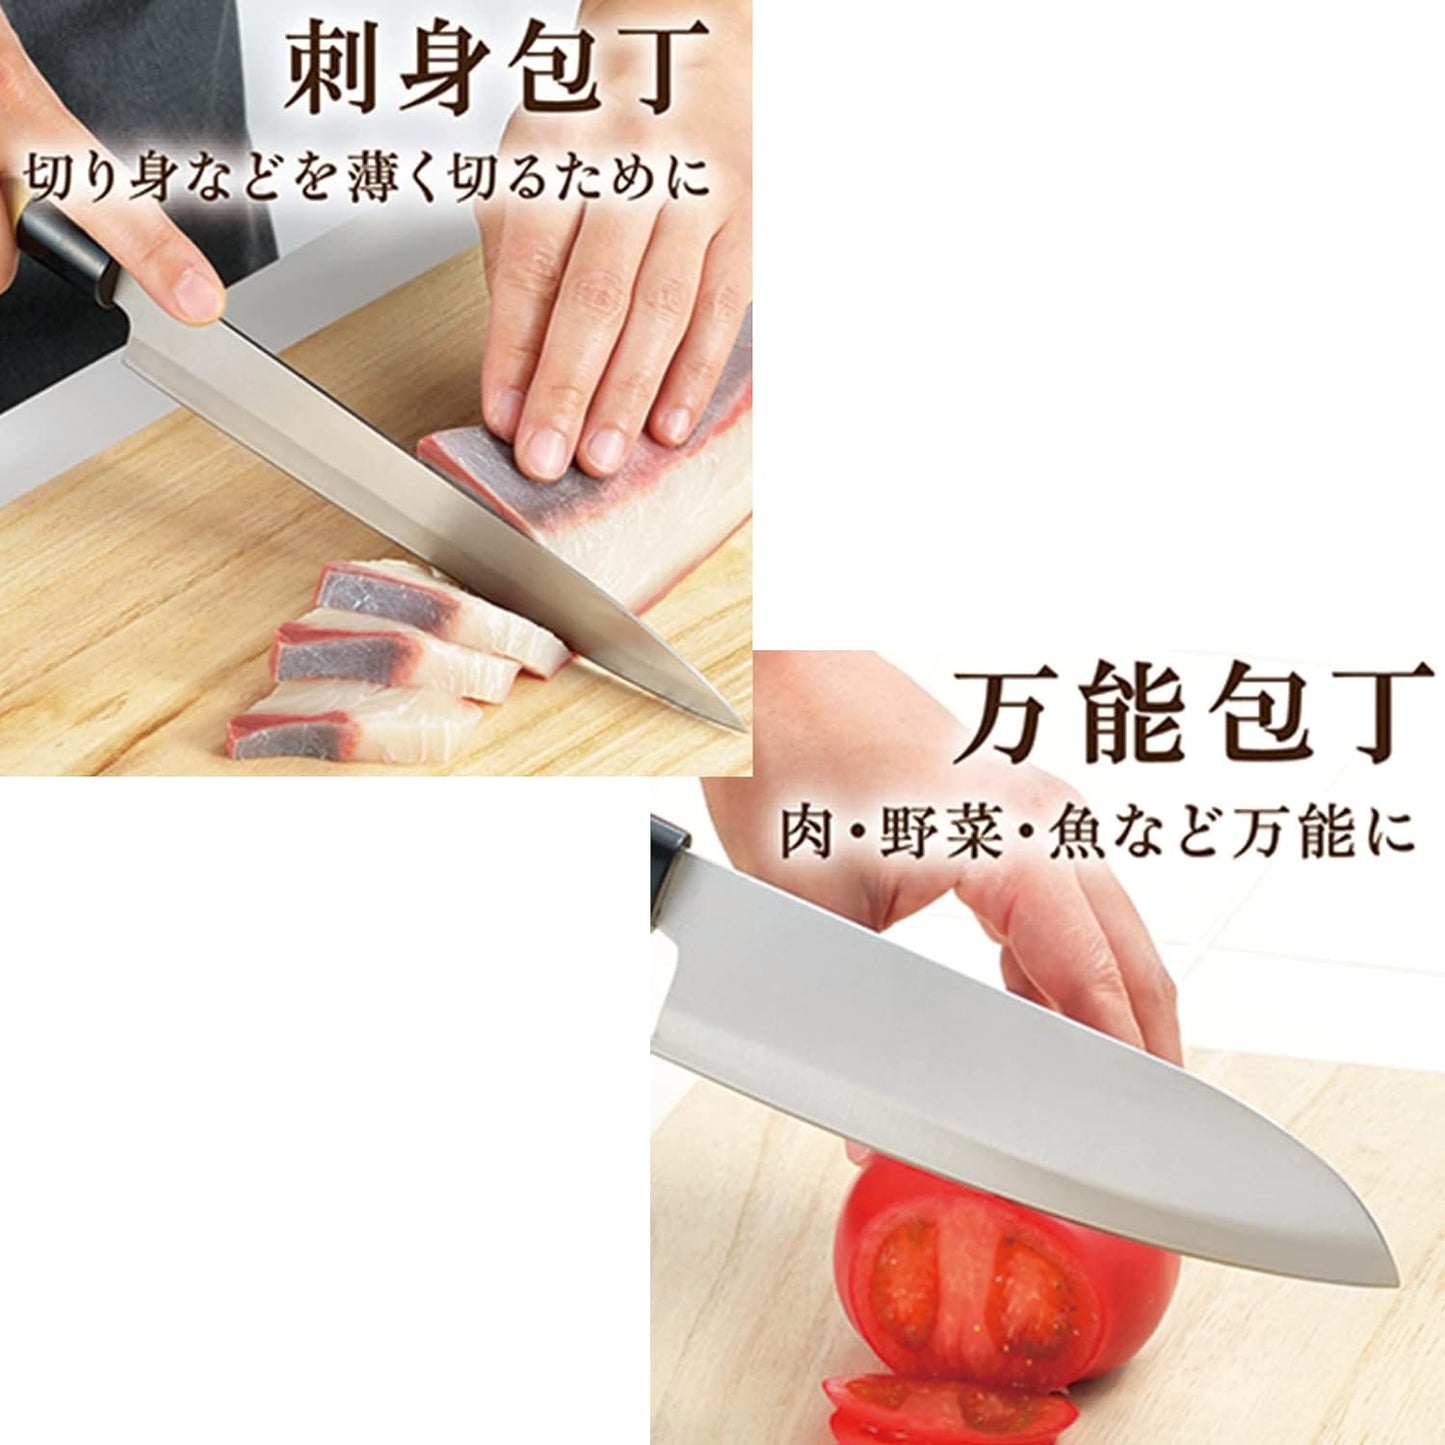 Kakuse Koumei Nakamua Japanese Knife Set of 5 2019 New Ver